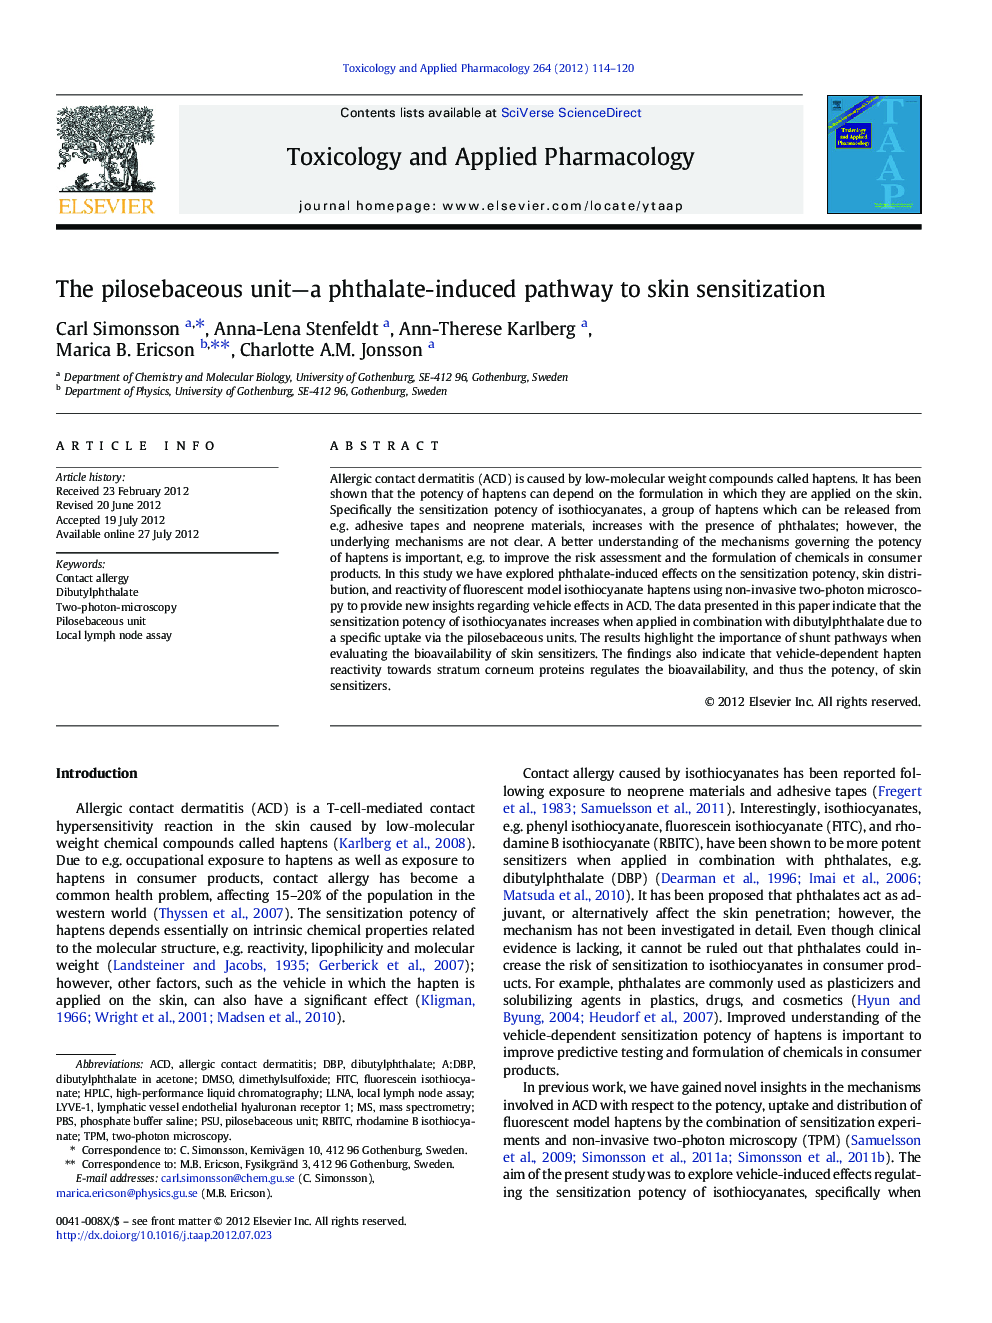 The pilosebaceous unit-a phthalate-induced pathway to skin sensitization